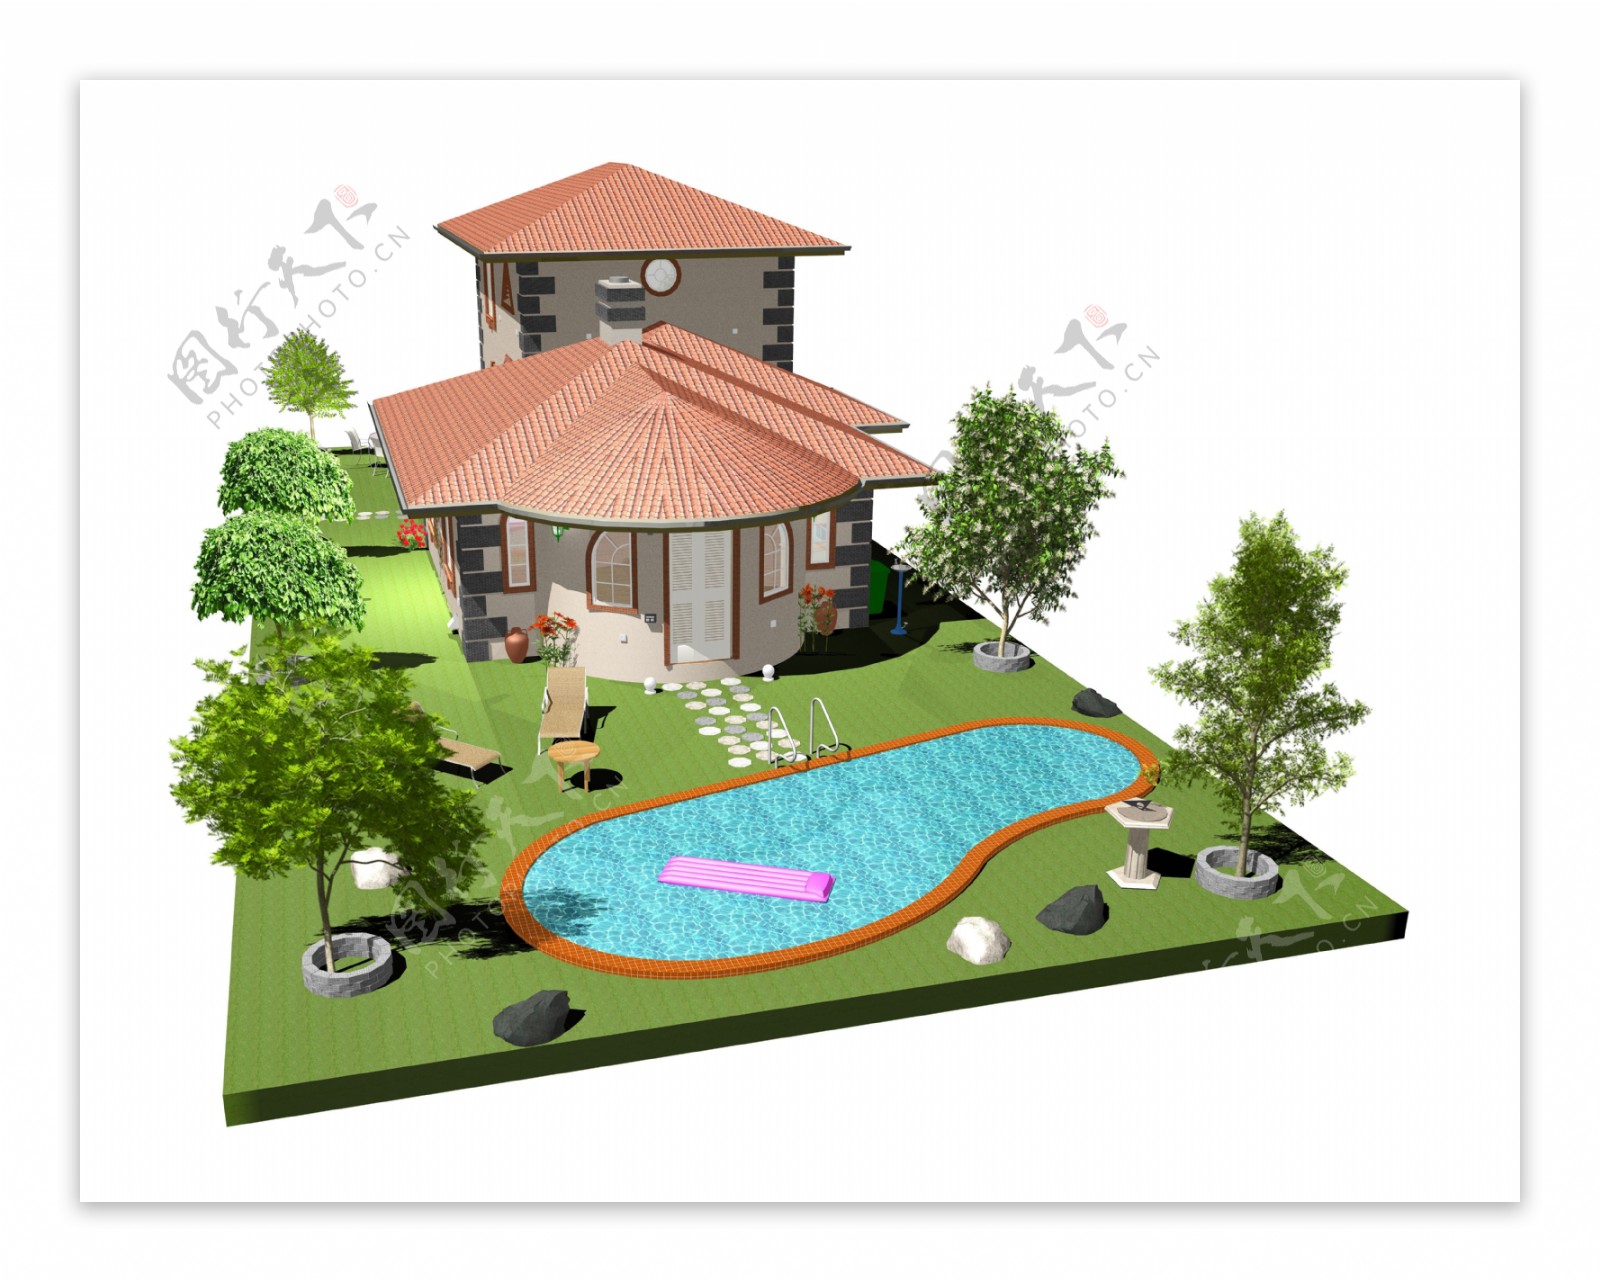 3D豪华别墅模型图片